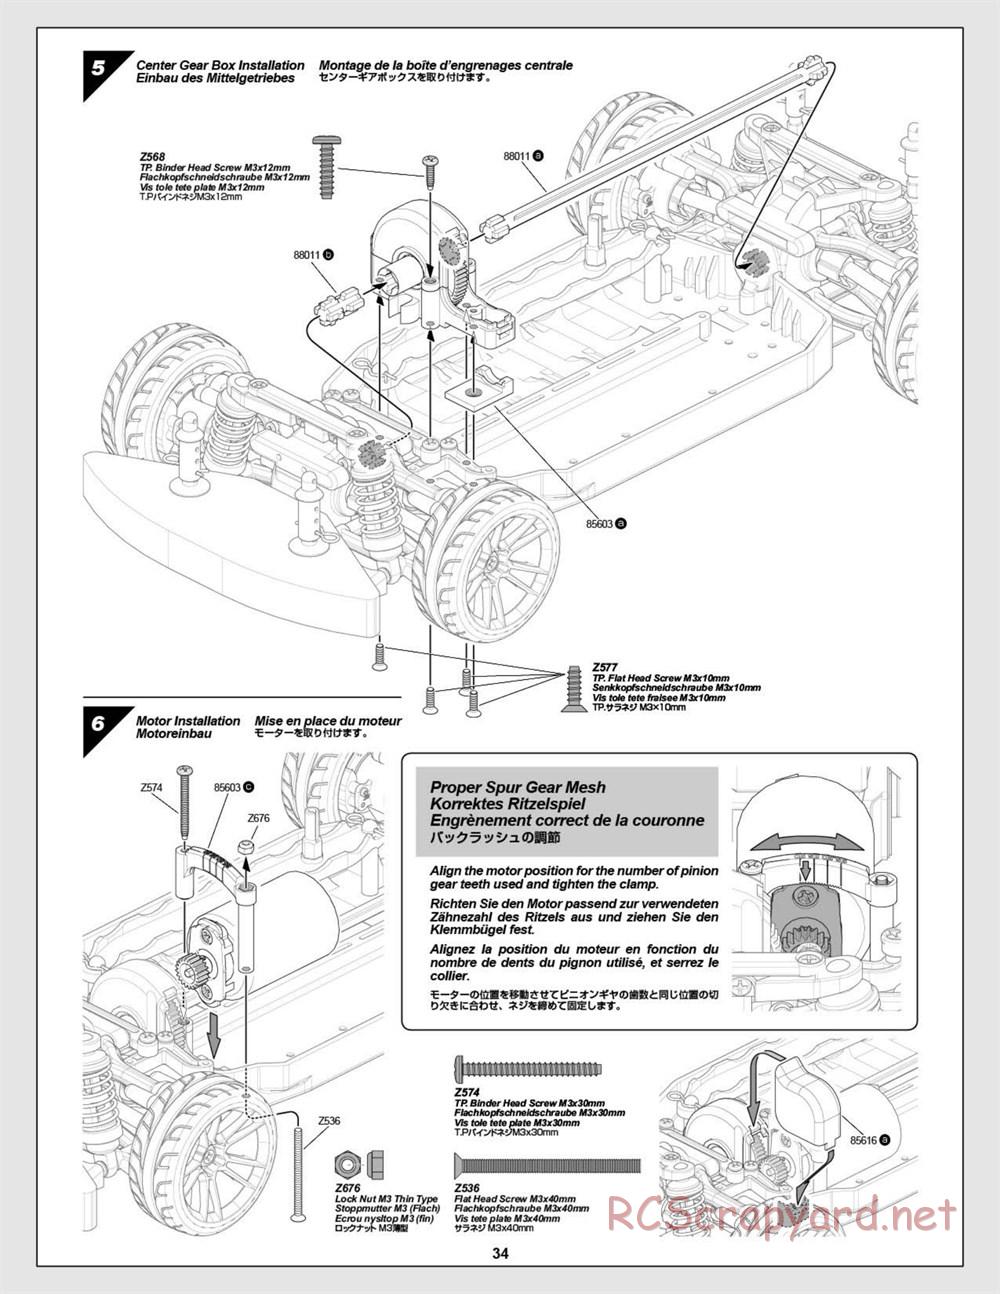 HPI - E10 - Manual - Page 34